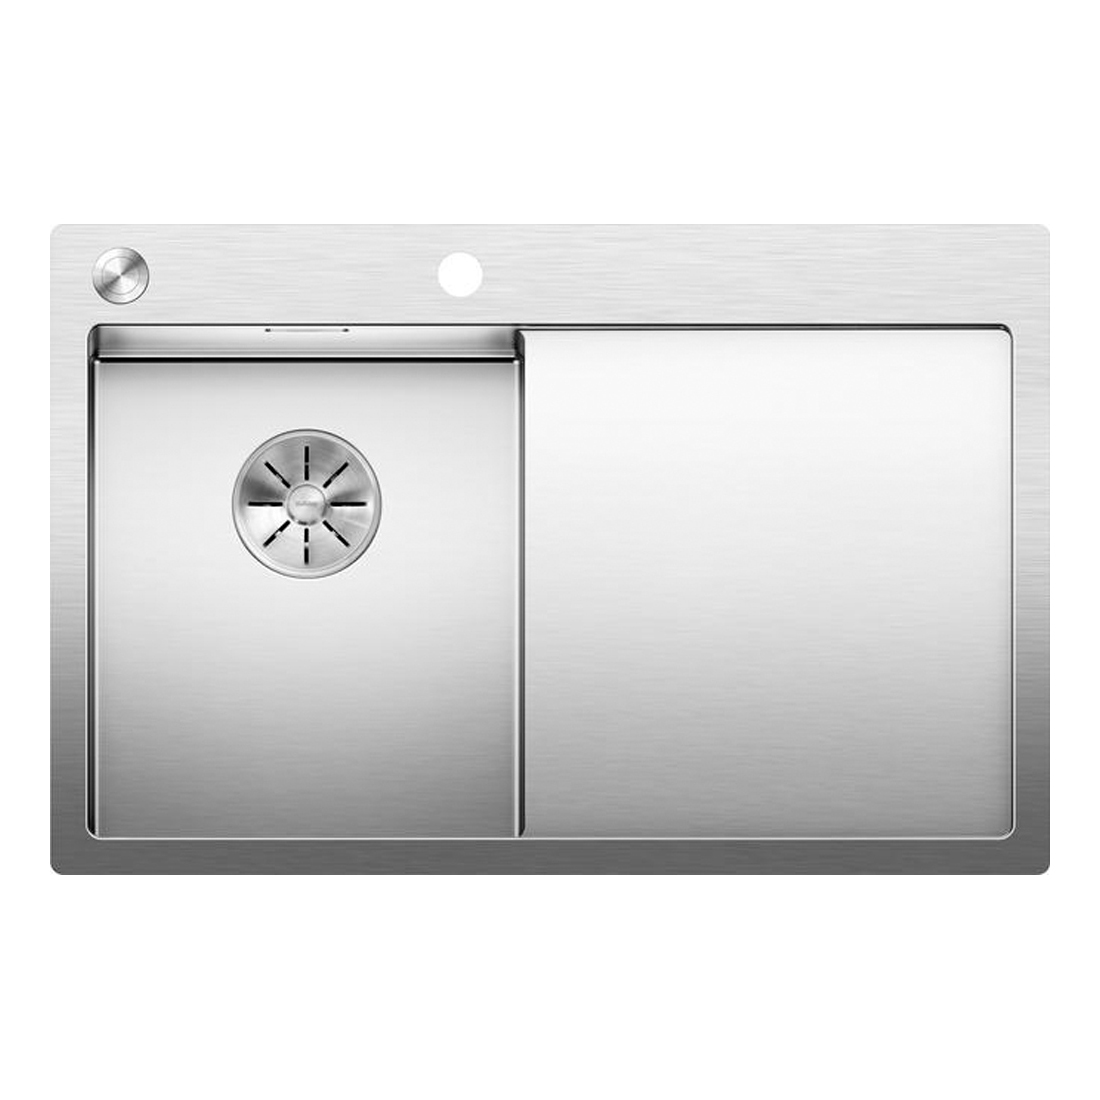 Кухонная мойка Blanco Claron 4S-IF/А L зеркальная полировка кухонная мойка blanco claron 550 if зеркальная полировка